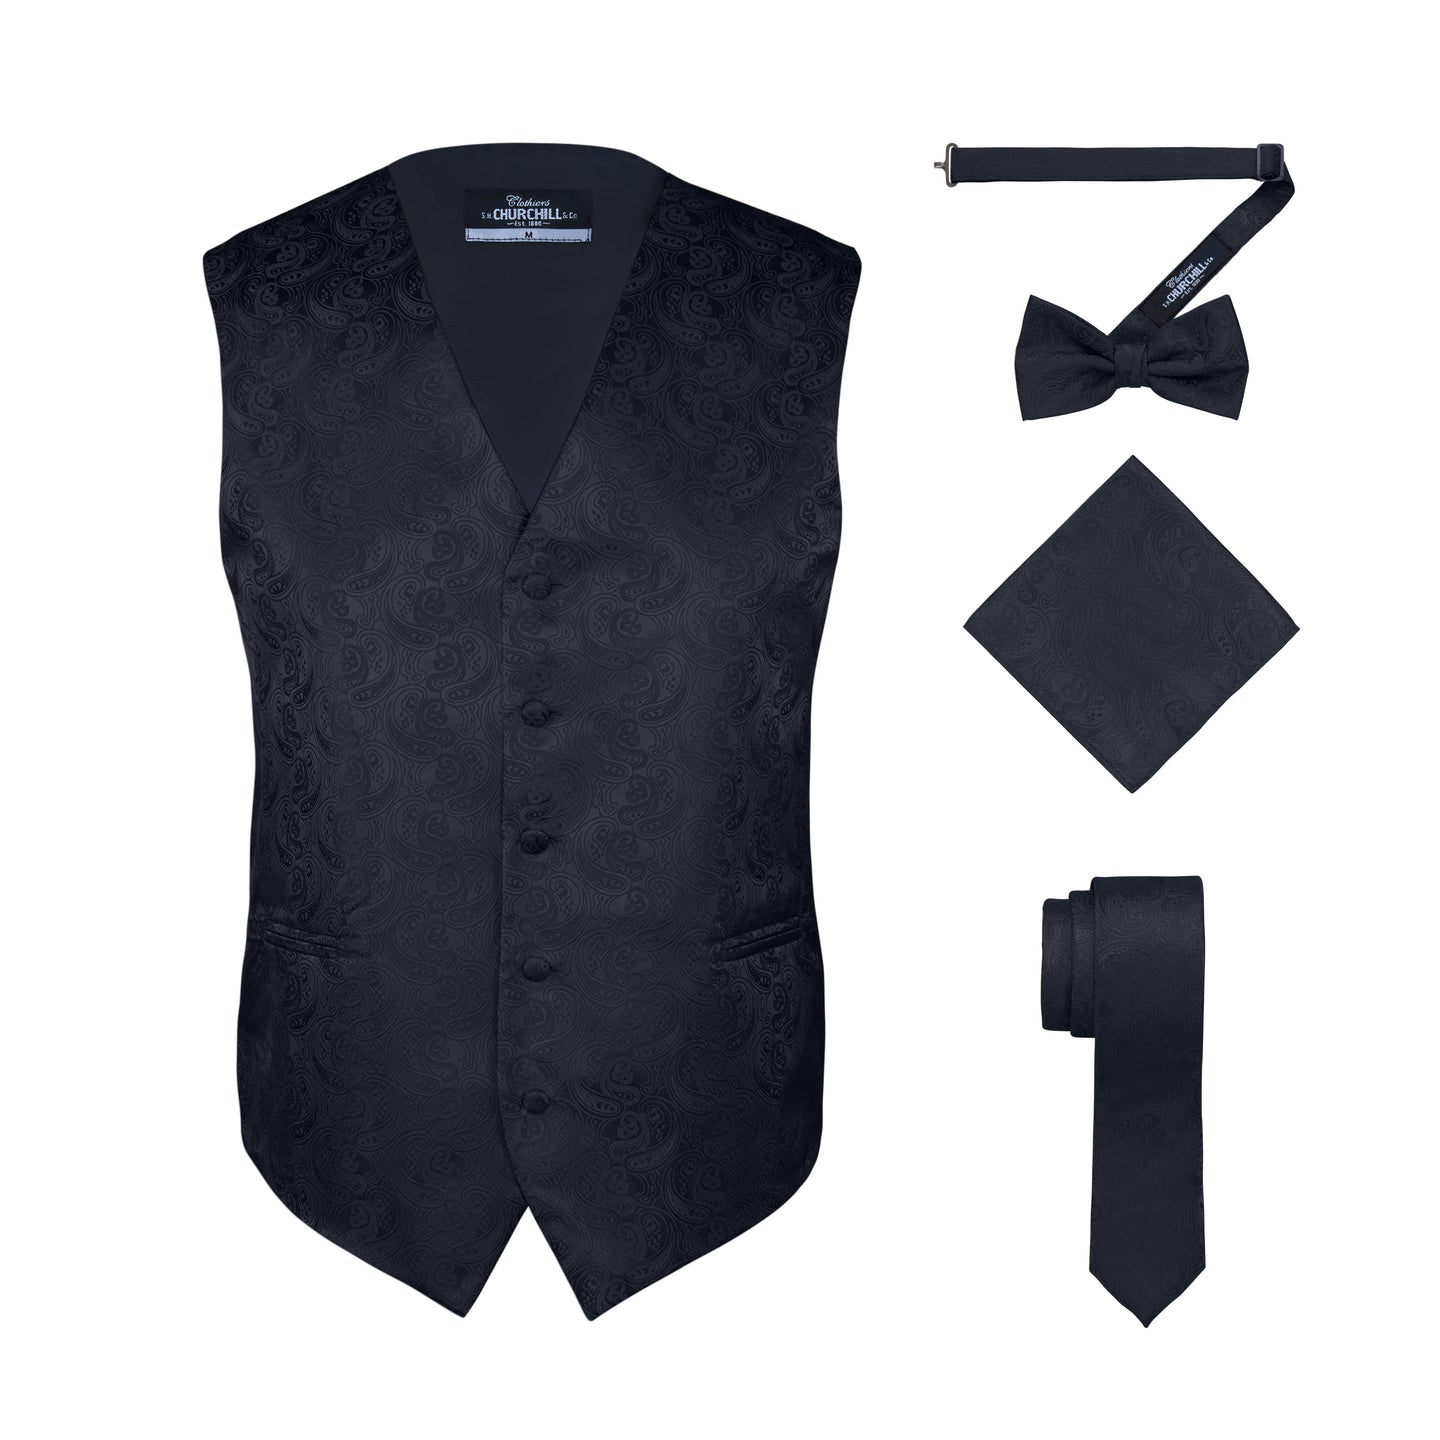 S.H. Churchill & Co. Men's Black Paisley Vest Set, with Bow Tie, Neck Tie and Pocket Hanky